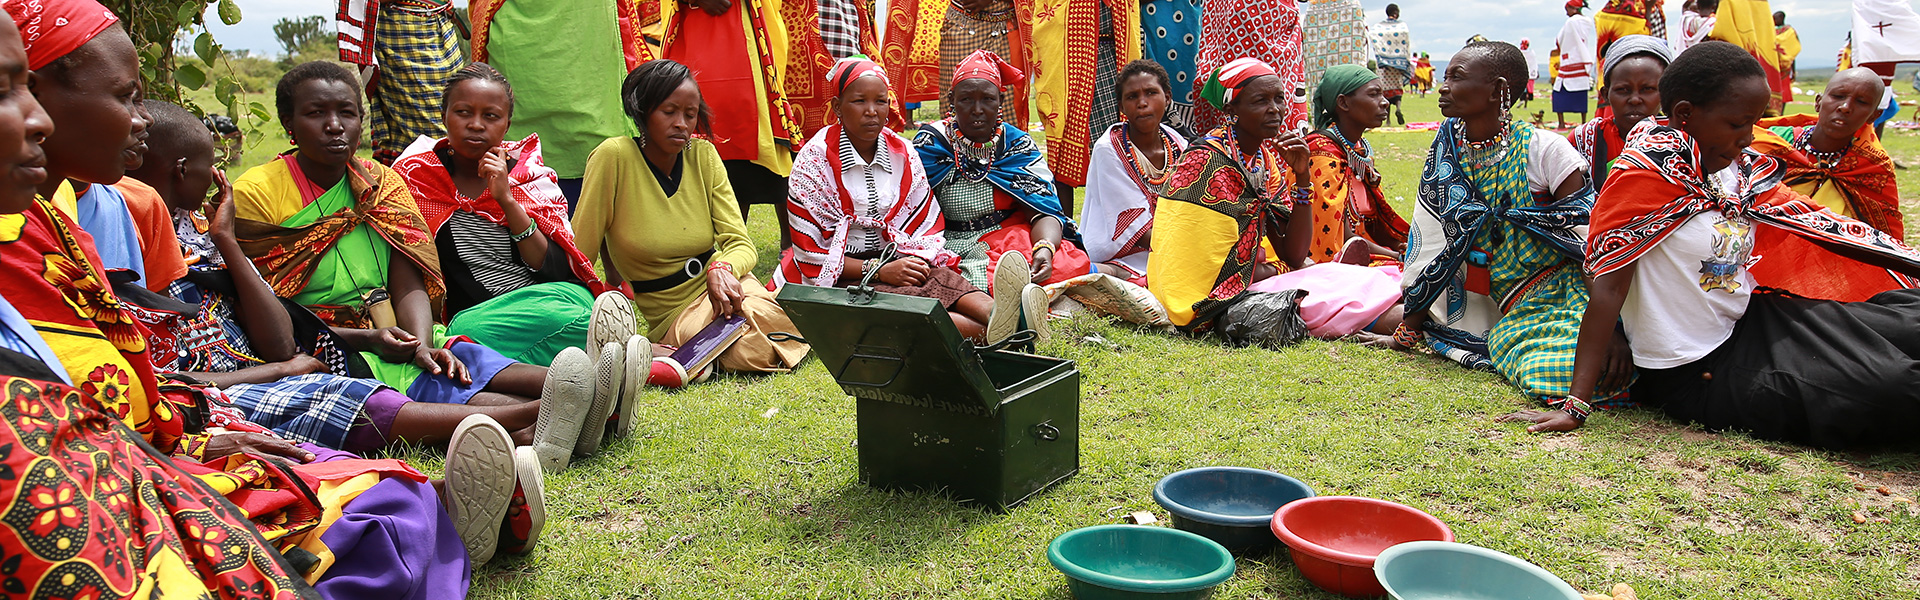 kenya-masai-savings-and-loan-groups